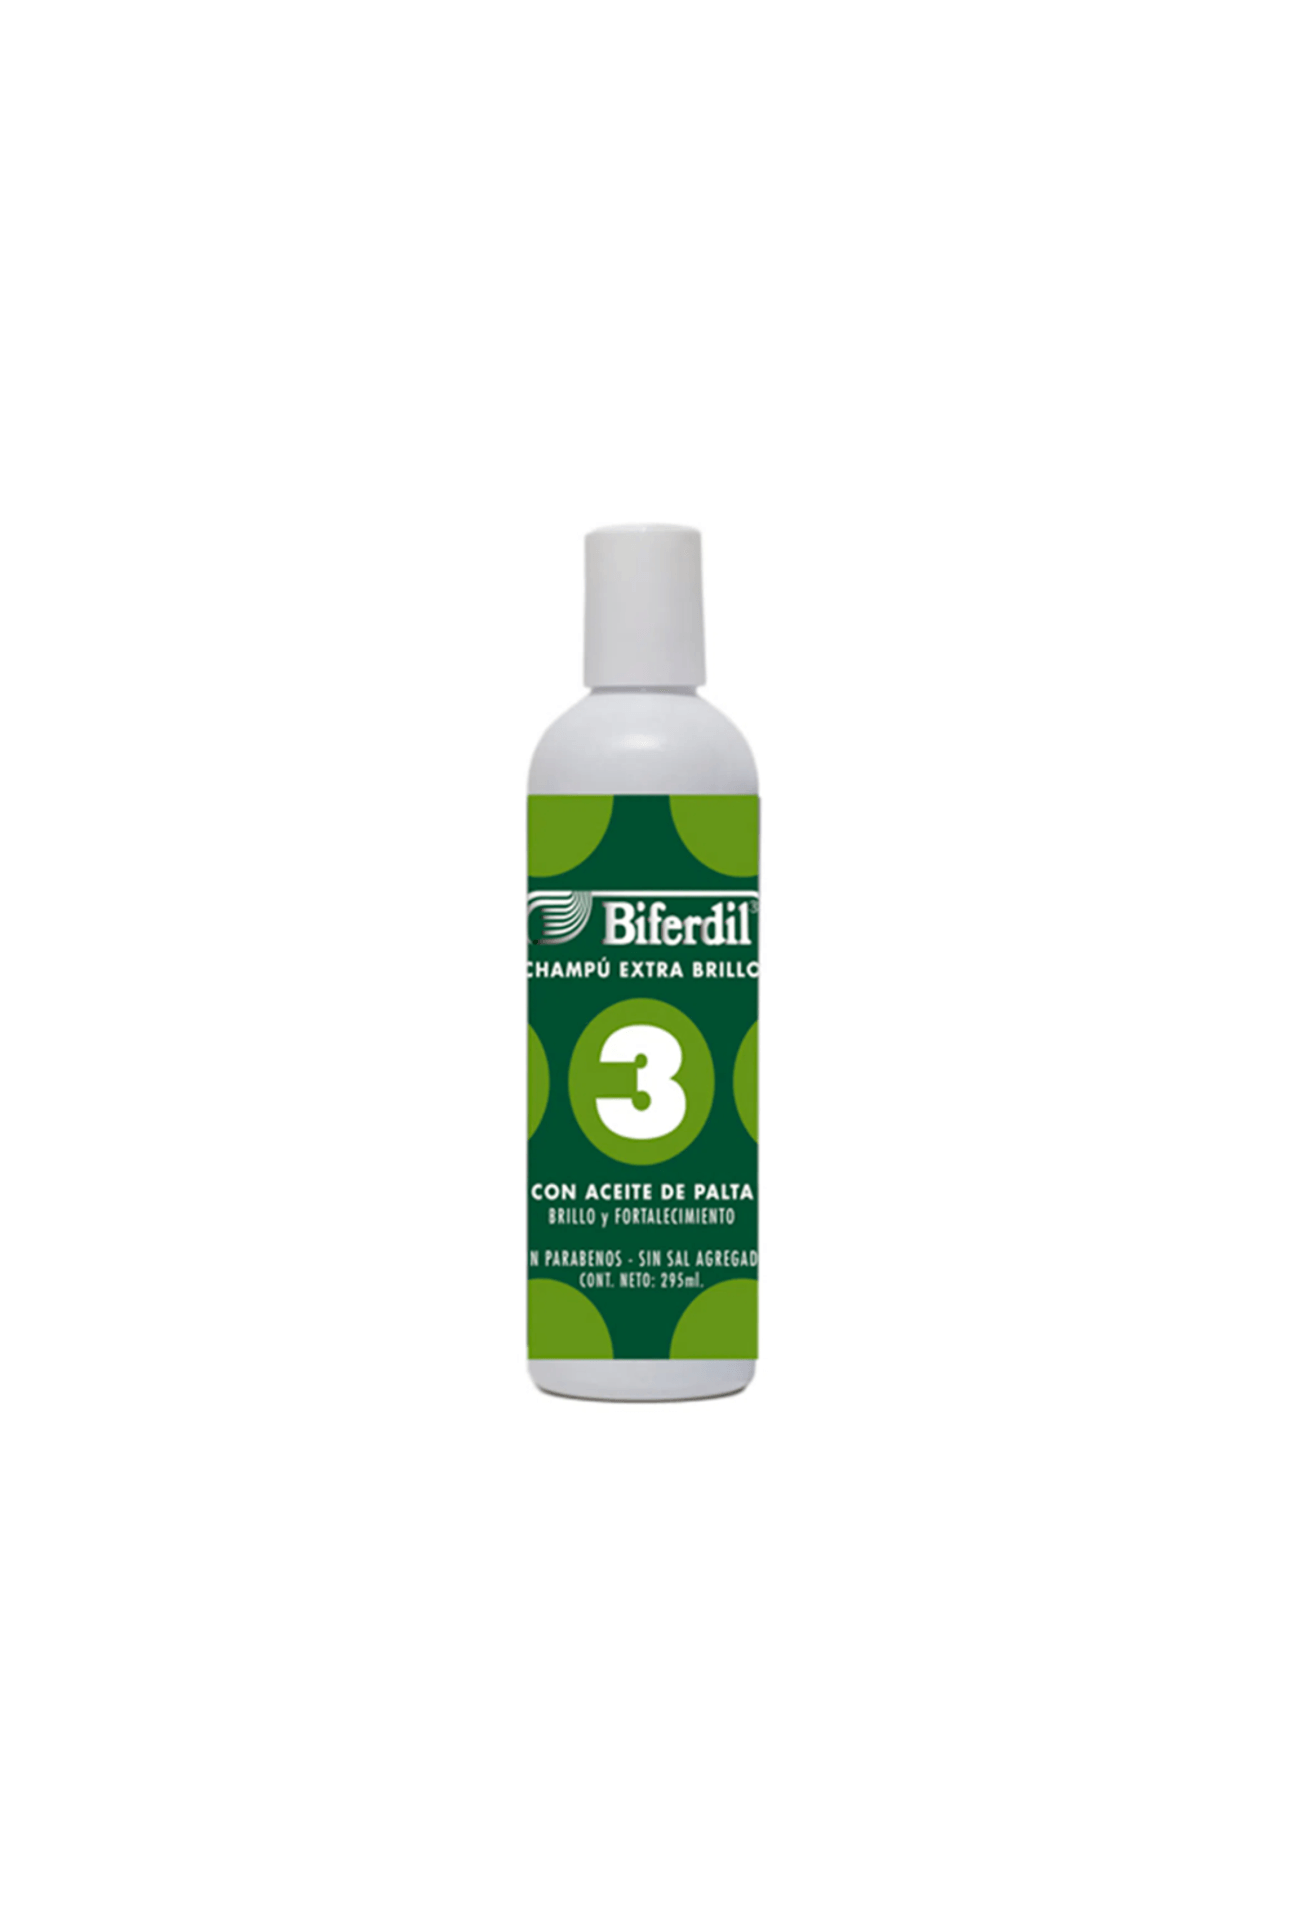 Biferdil-Shampoo con Aceite de Palta x 295 ml-7791001010848